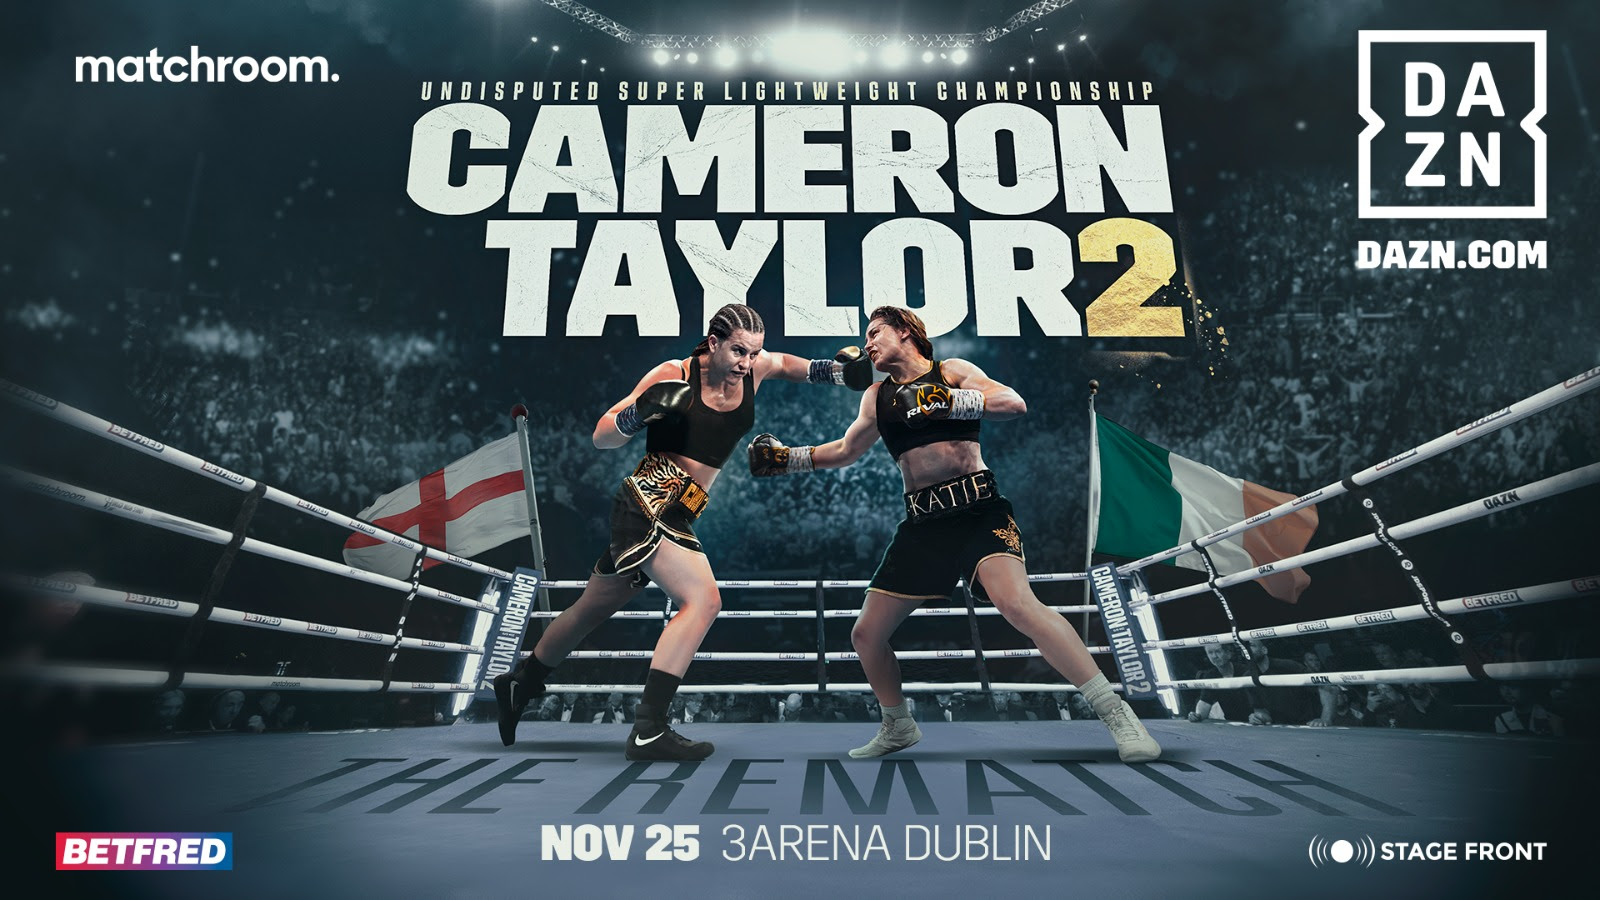 Cameron rematches Taylor in Dublin, November 25